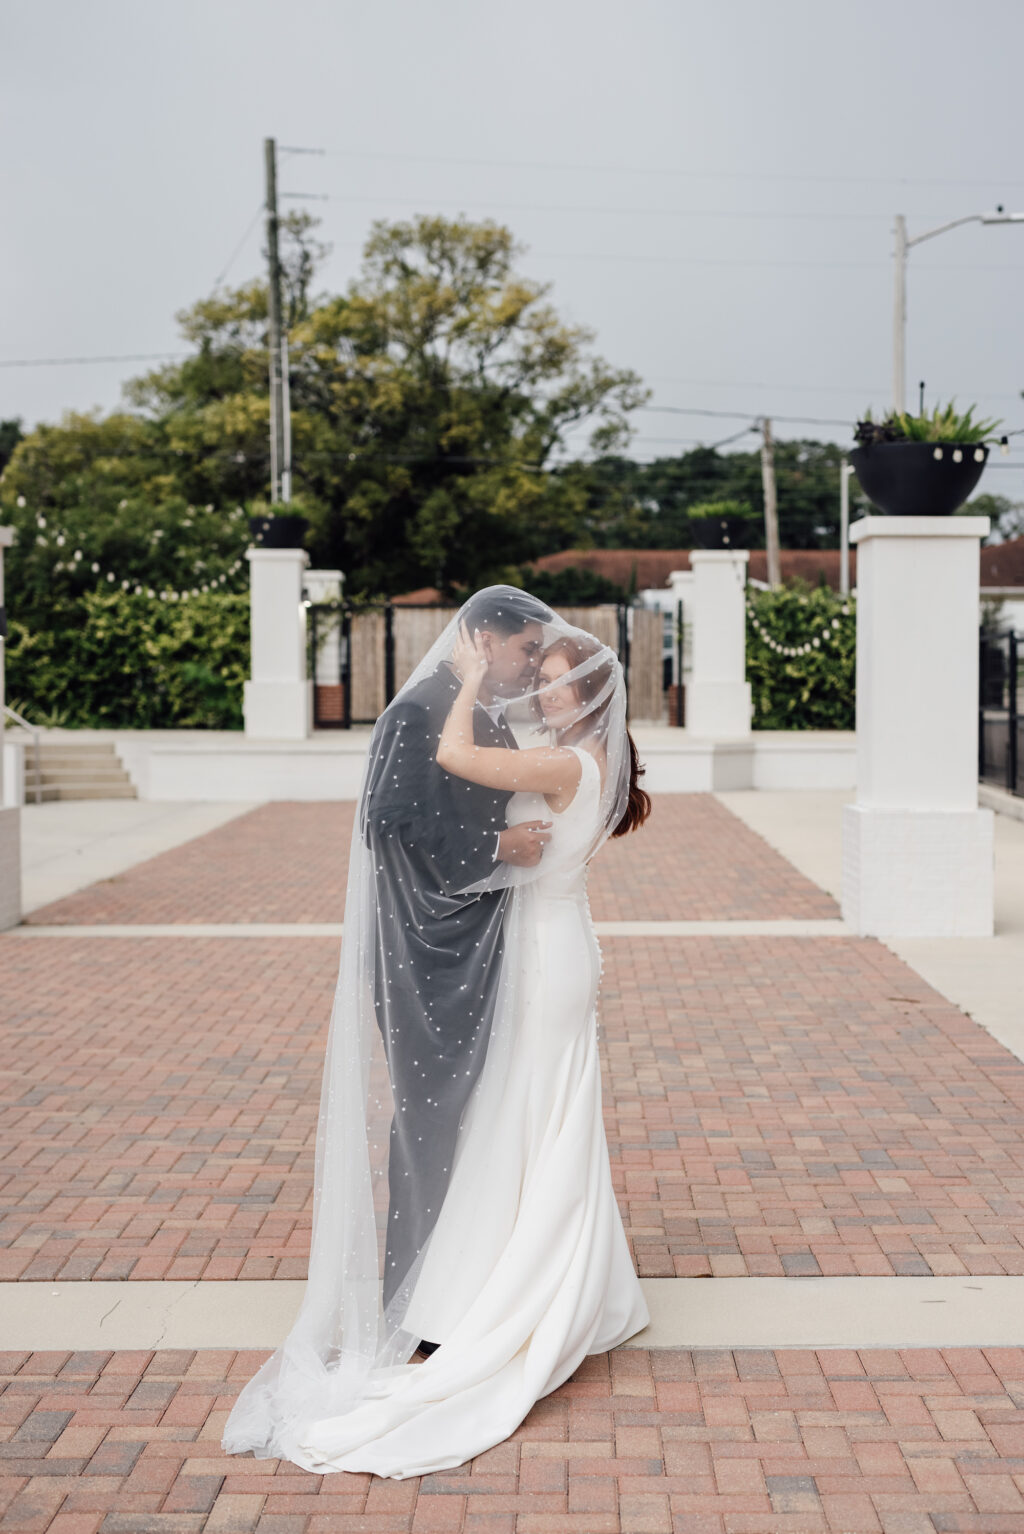 Bride and Groom Veil Portrait | Brick Courtyard Ceremony and Reception Site | Market Lights | Tampa Bay Wedding Venue Haus 820